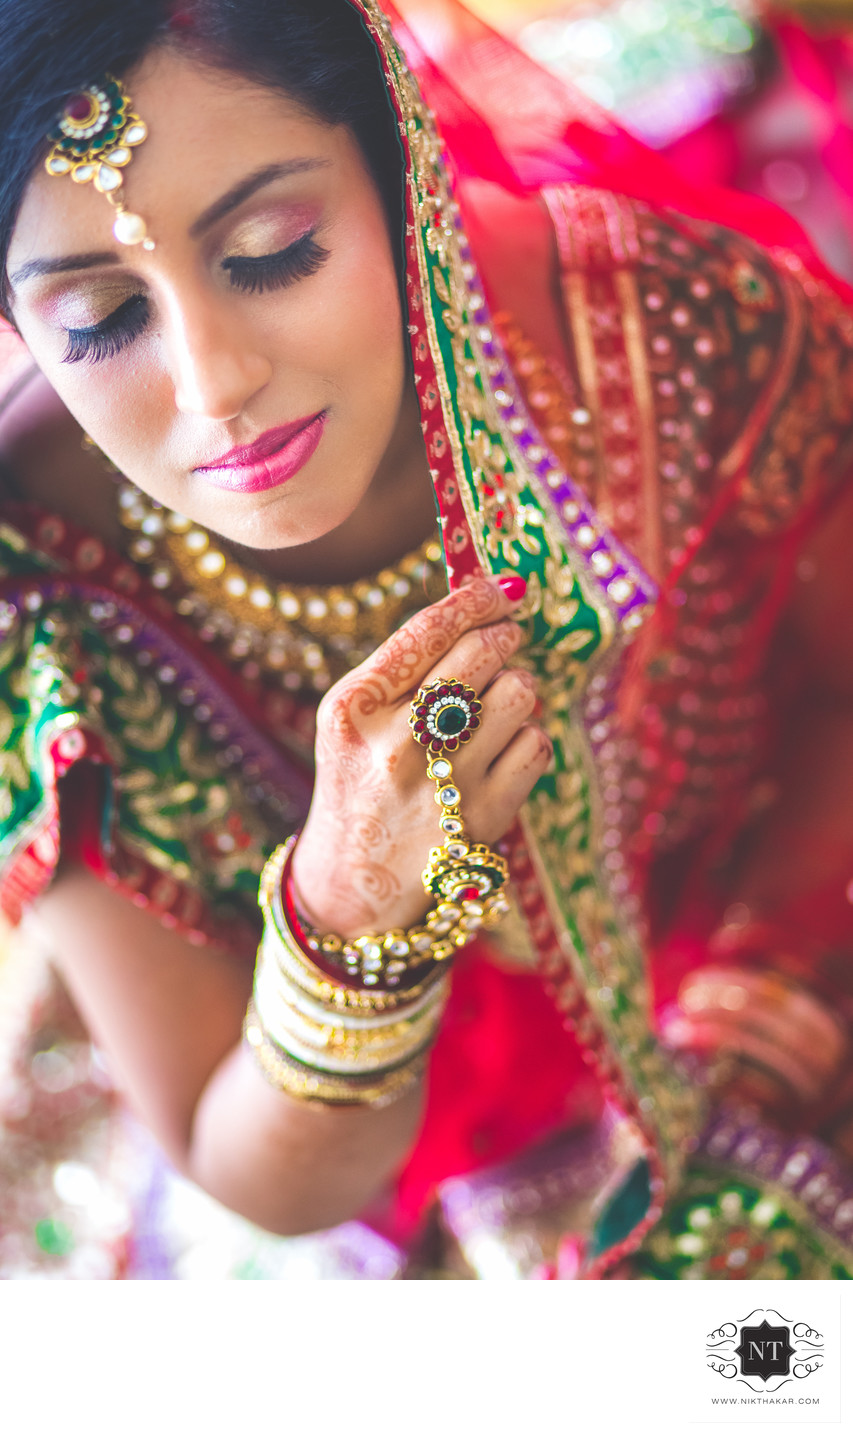 Indian Bridal Portrait Photographer Nik Thakar